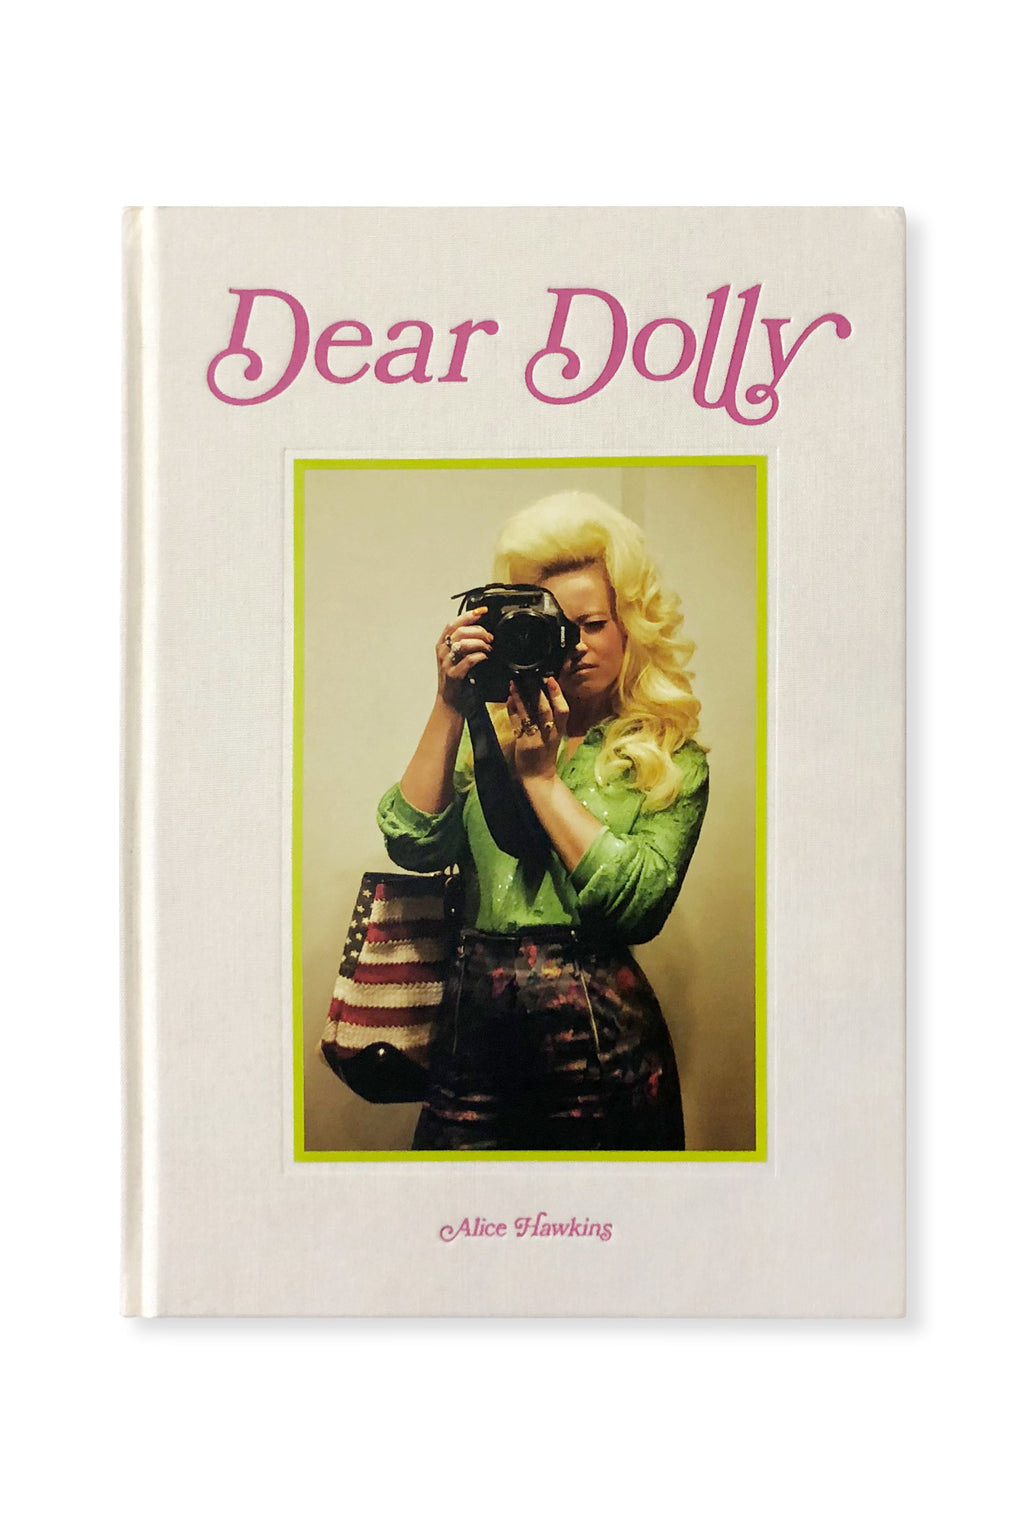 Dear Dolly by Alice Hawkins